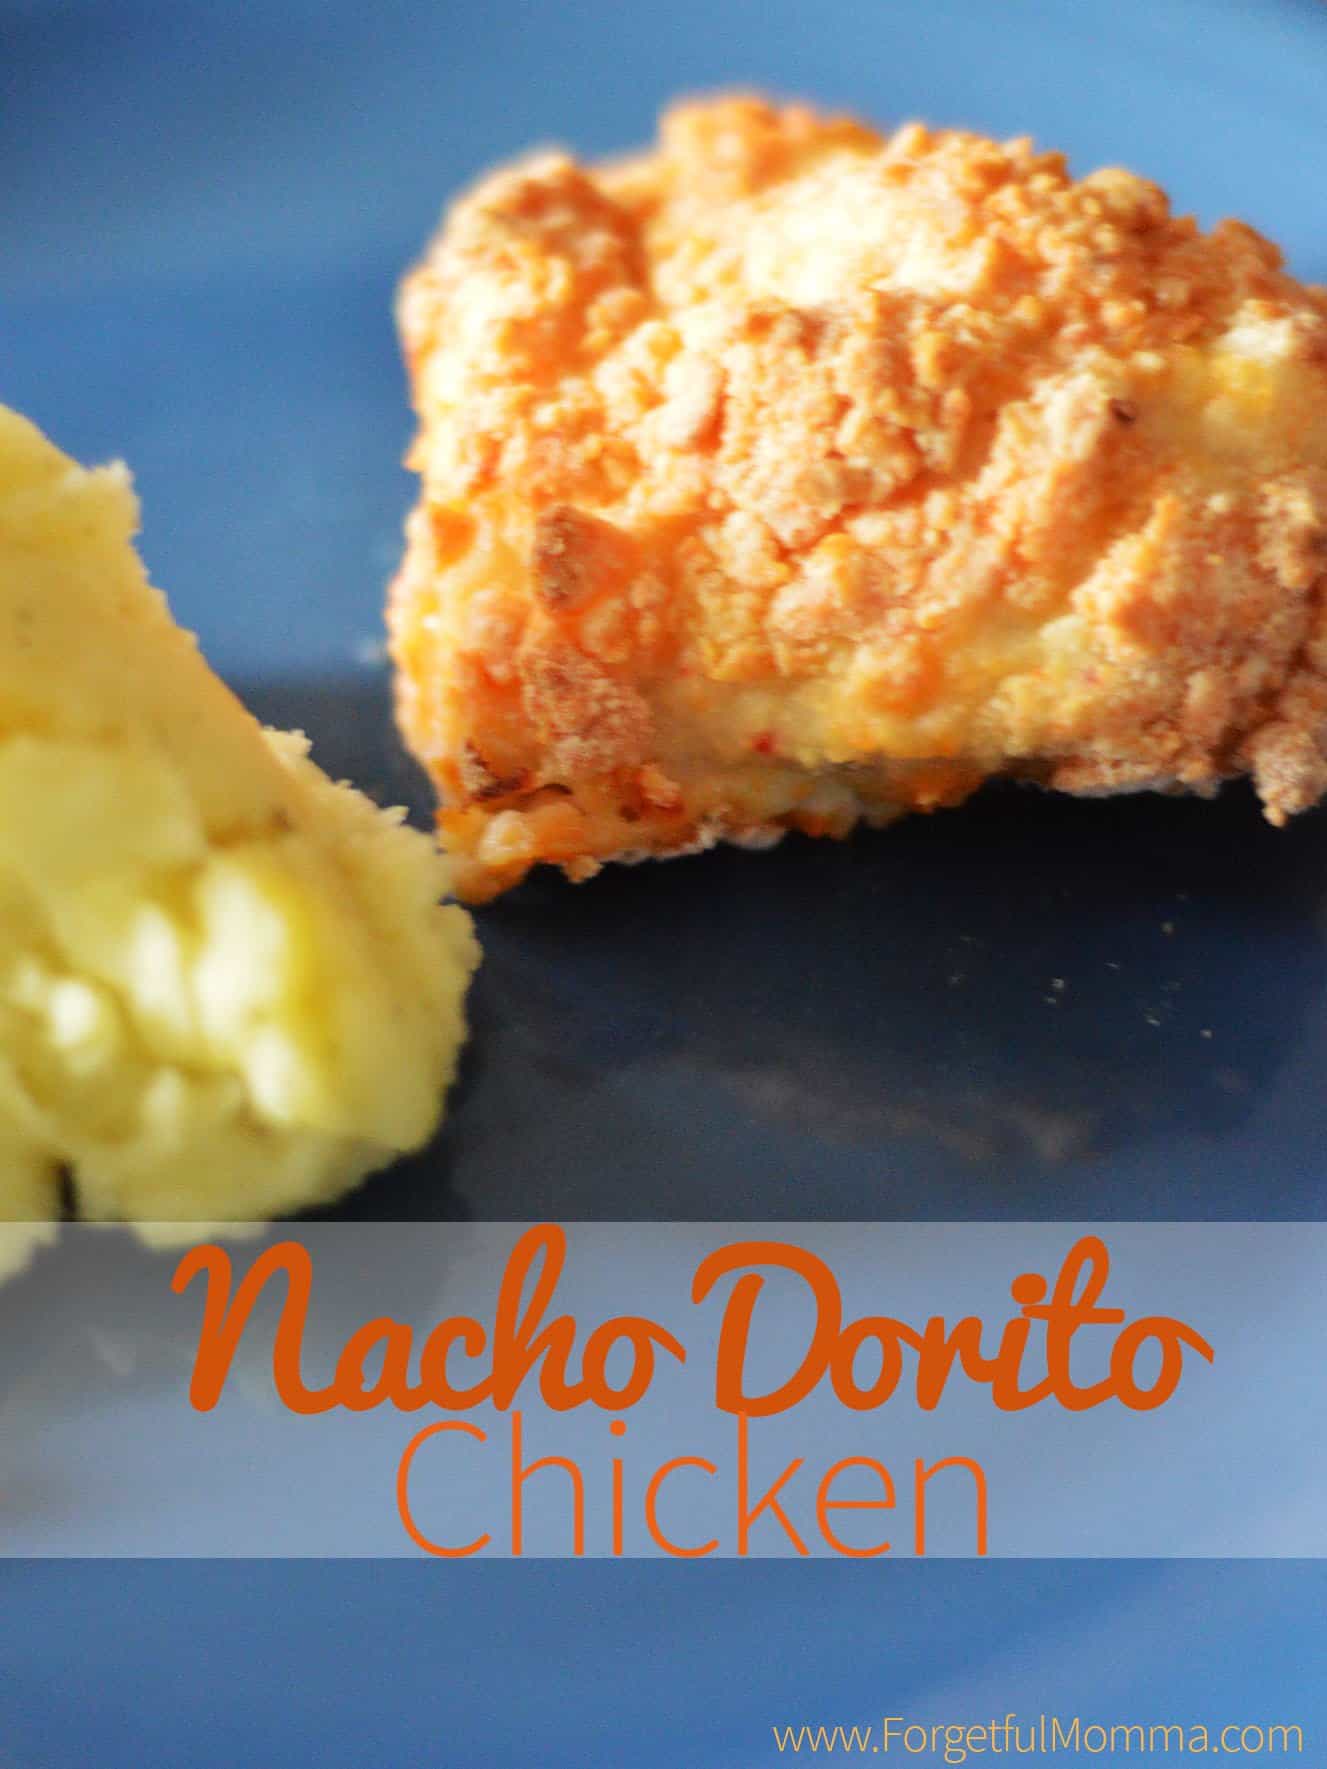 Nacho Doritos chicken - baked recipe